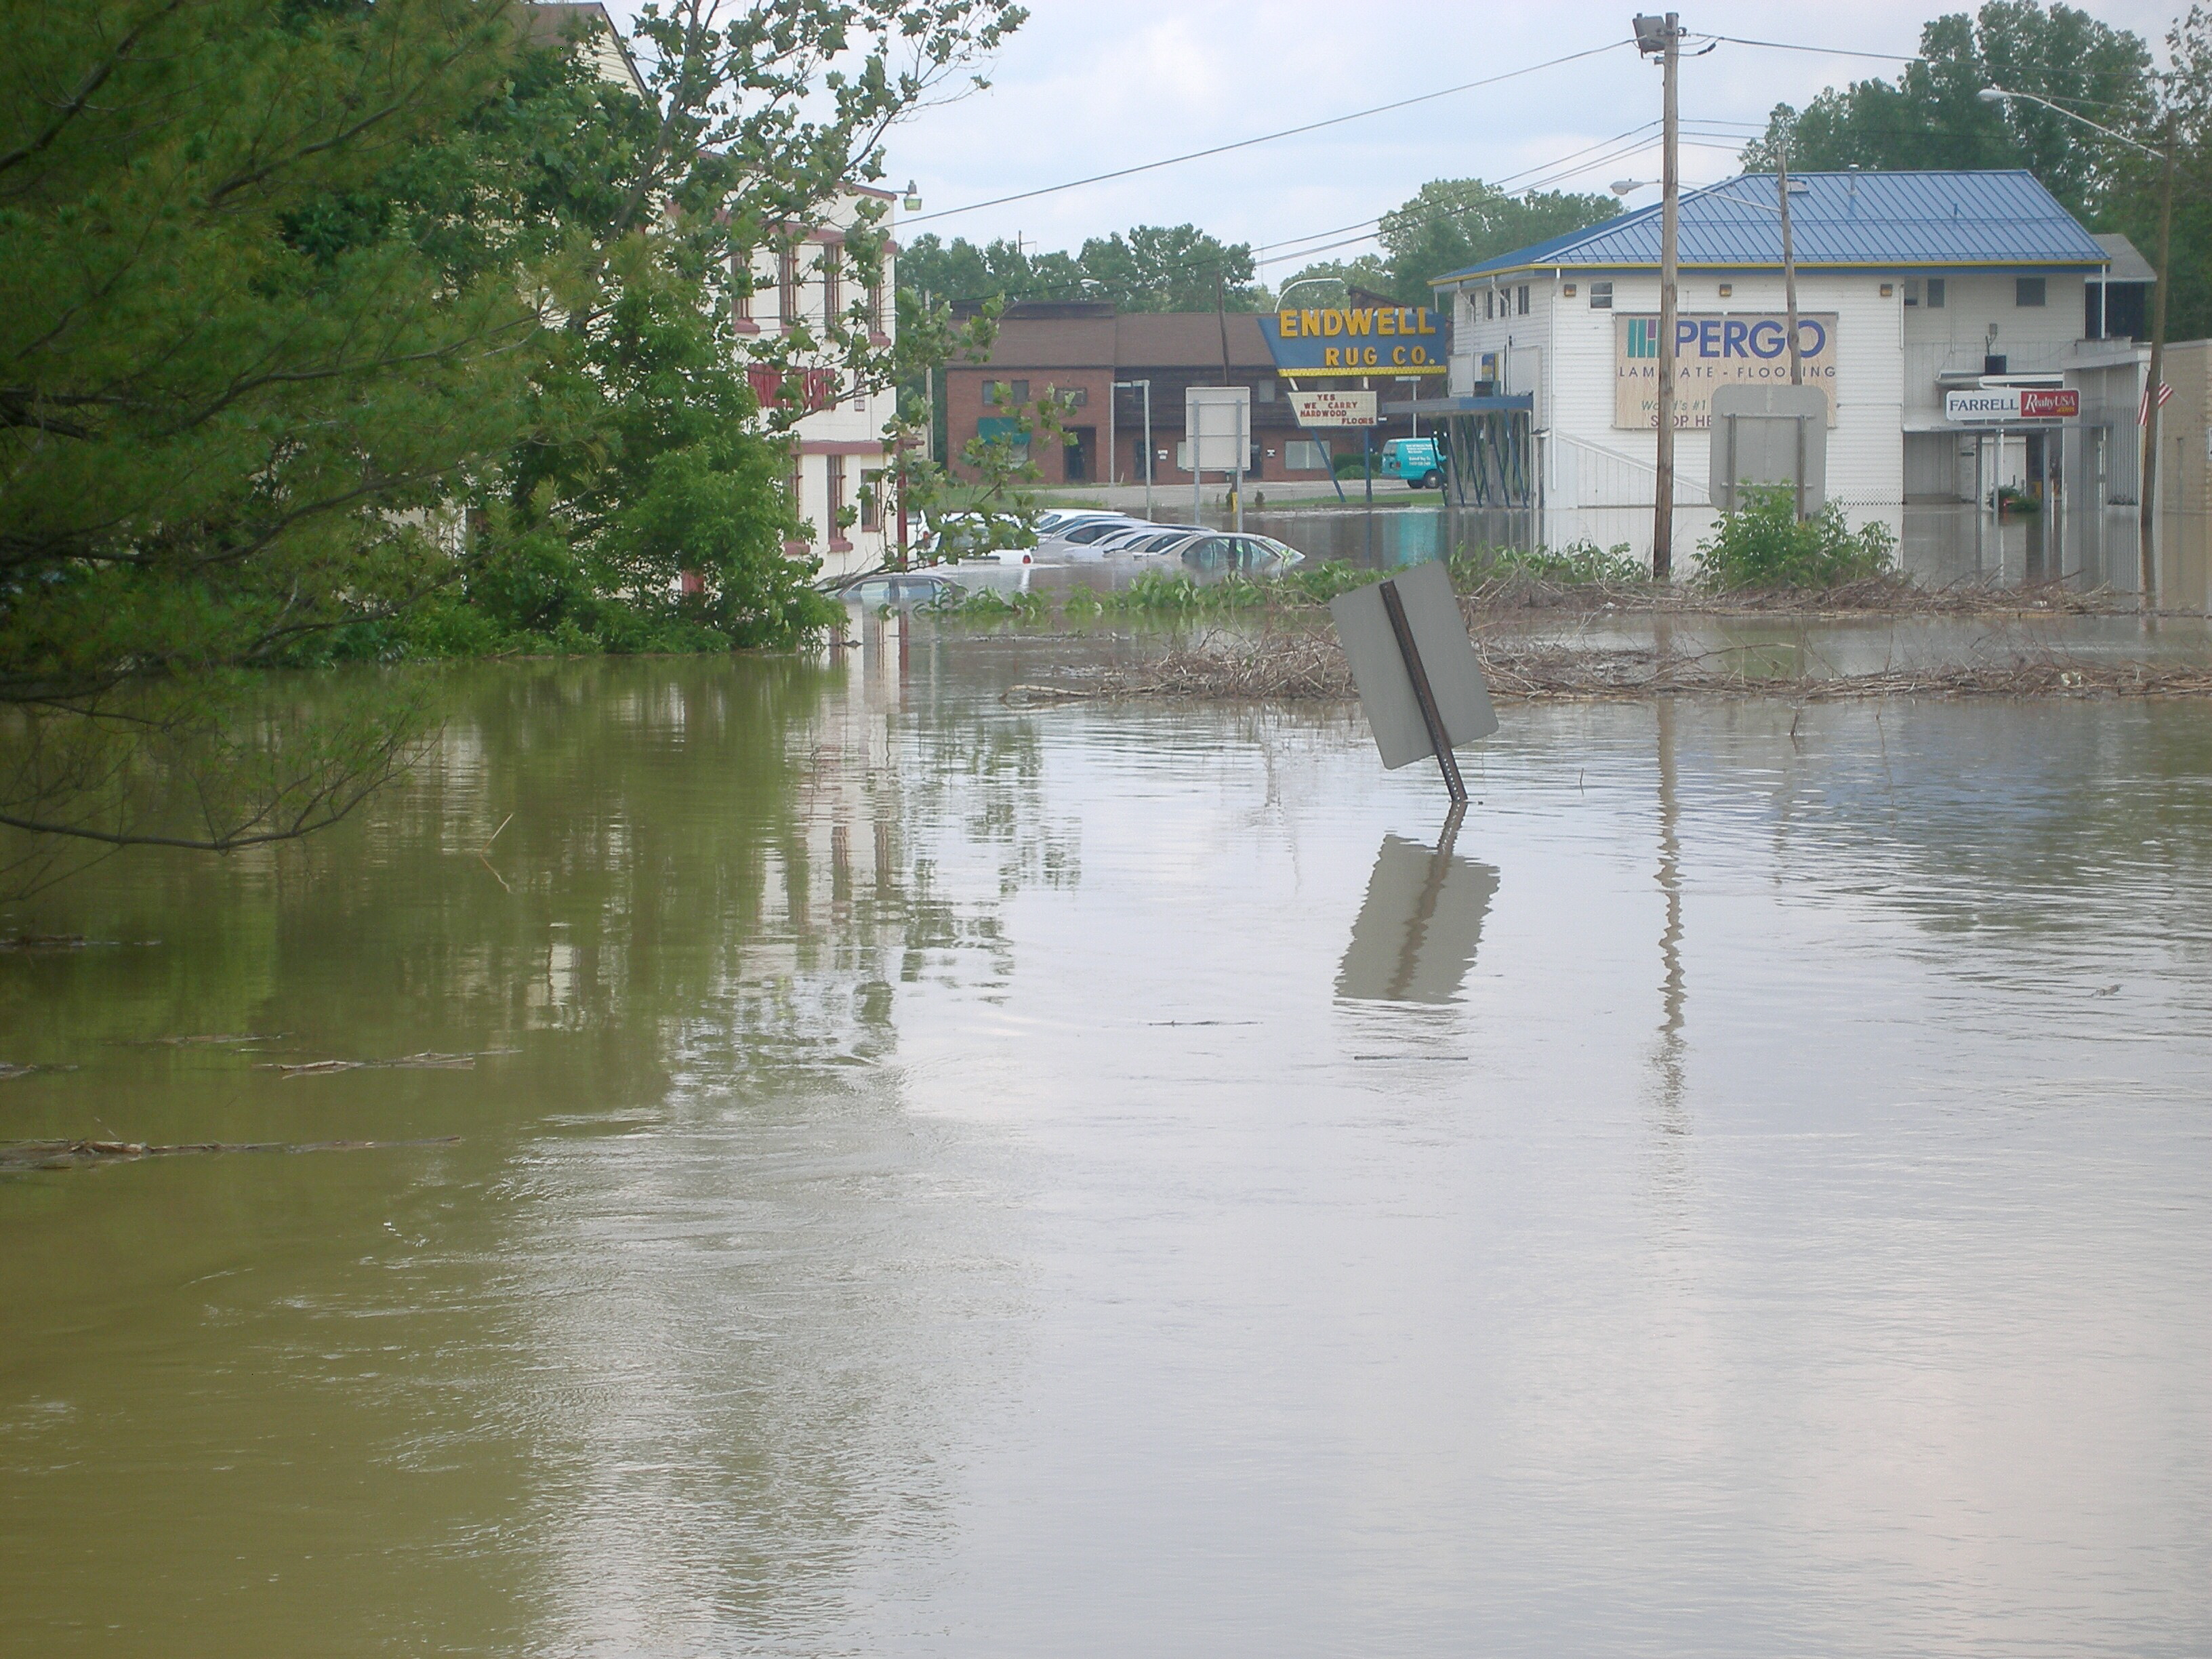 06-28-06  Reponse - Flooding